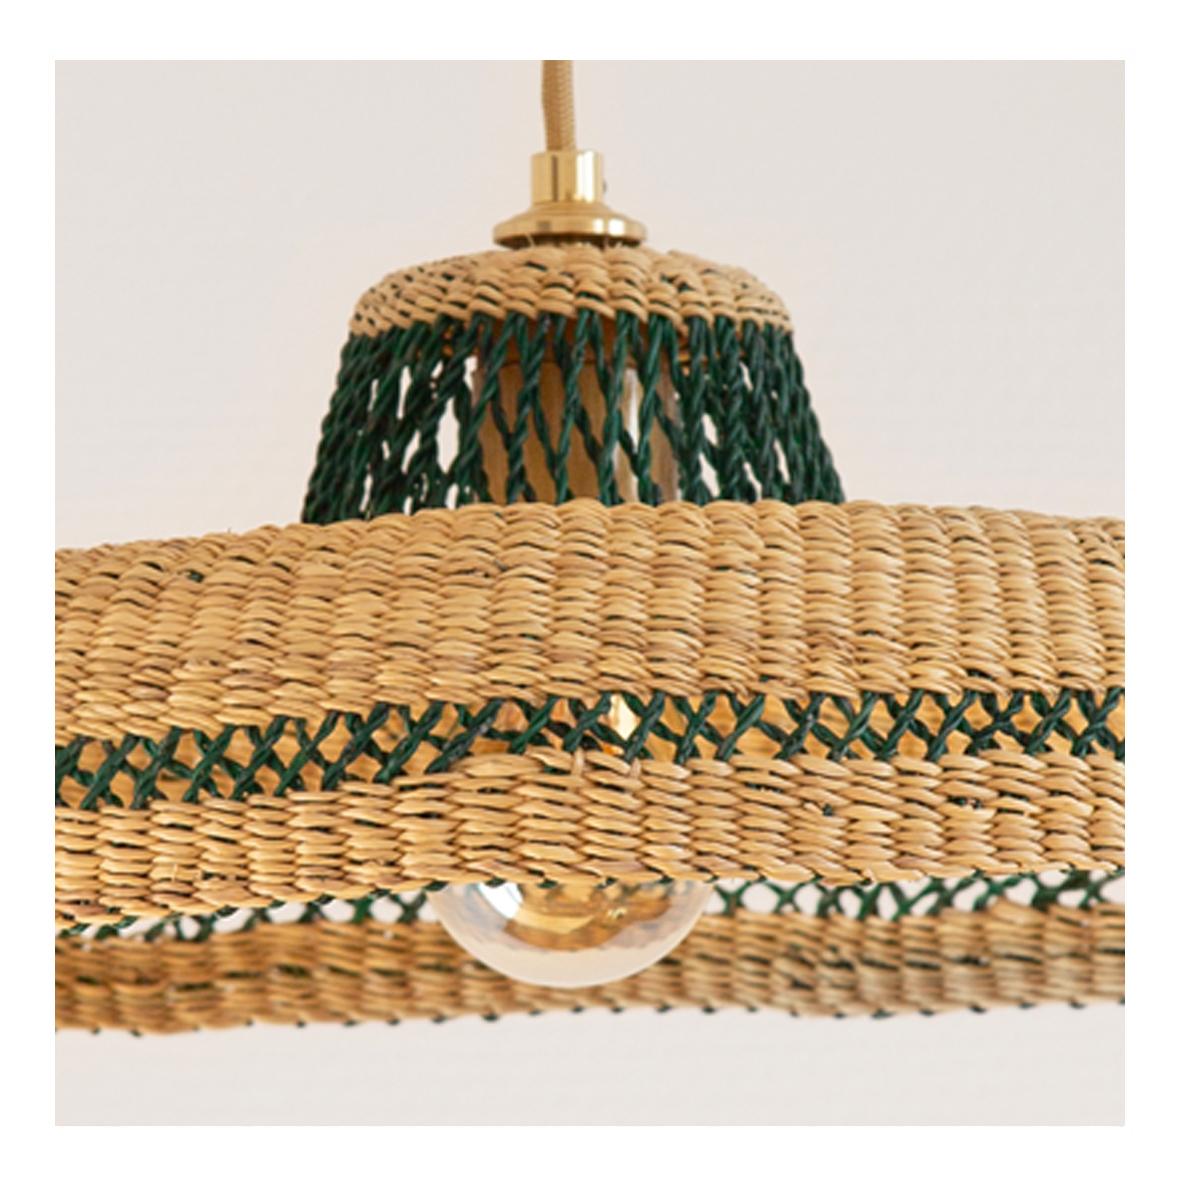 Modern Contemporary Golden Editions Medium Pendant Lamp Handwoven Straw Natural Green